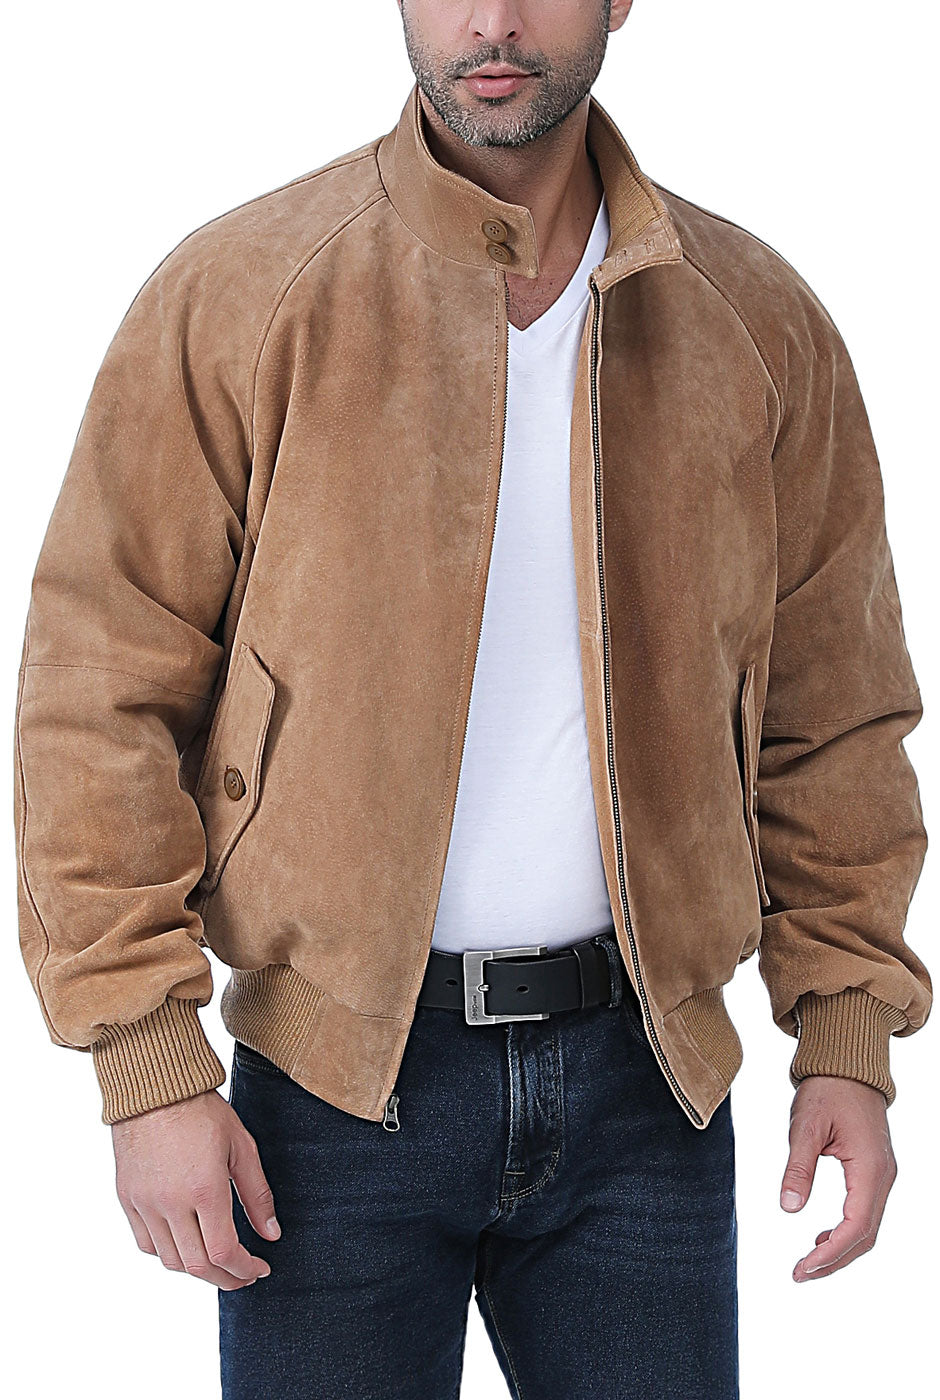 Men's Tan Leather Suede Bomber Jacket - Brown Bomber Jacket